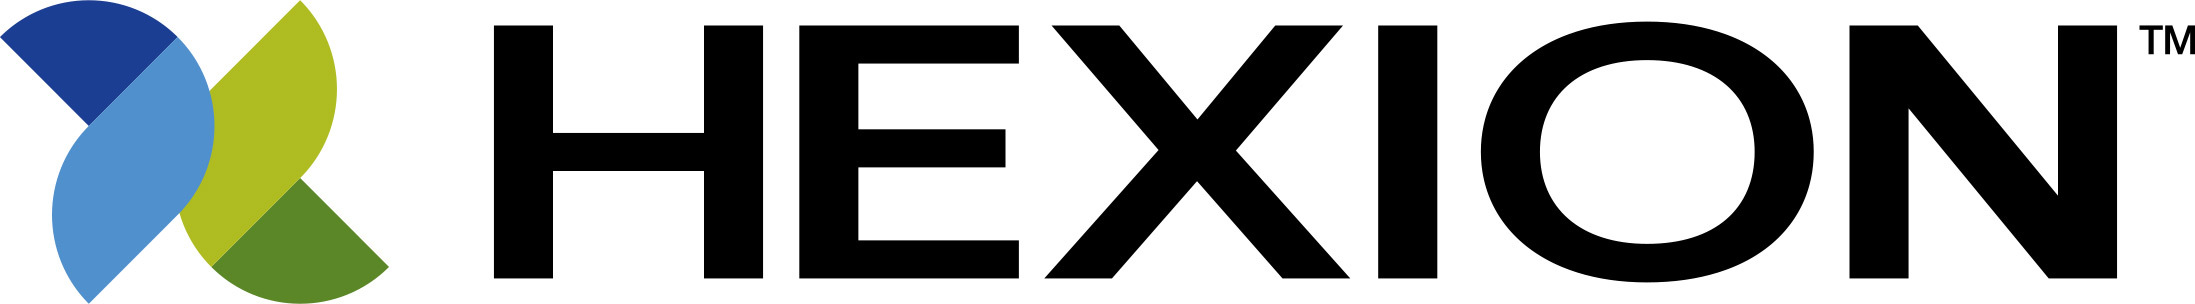 Hexion_logo_rgb_2015